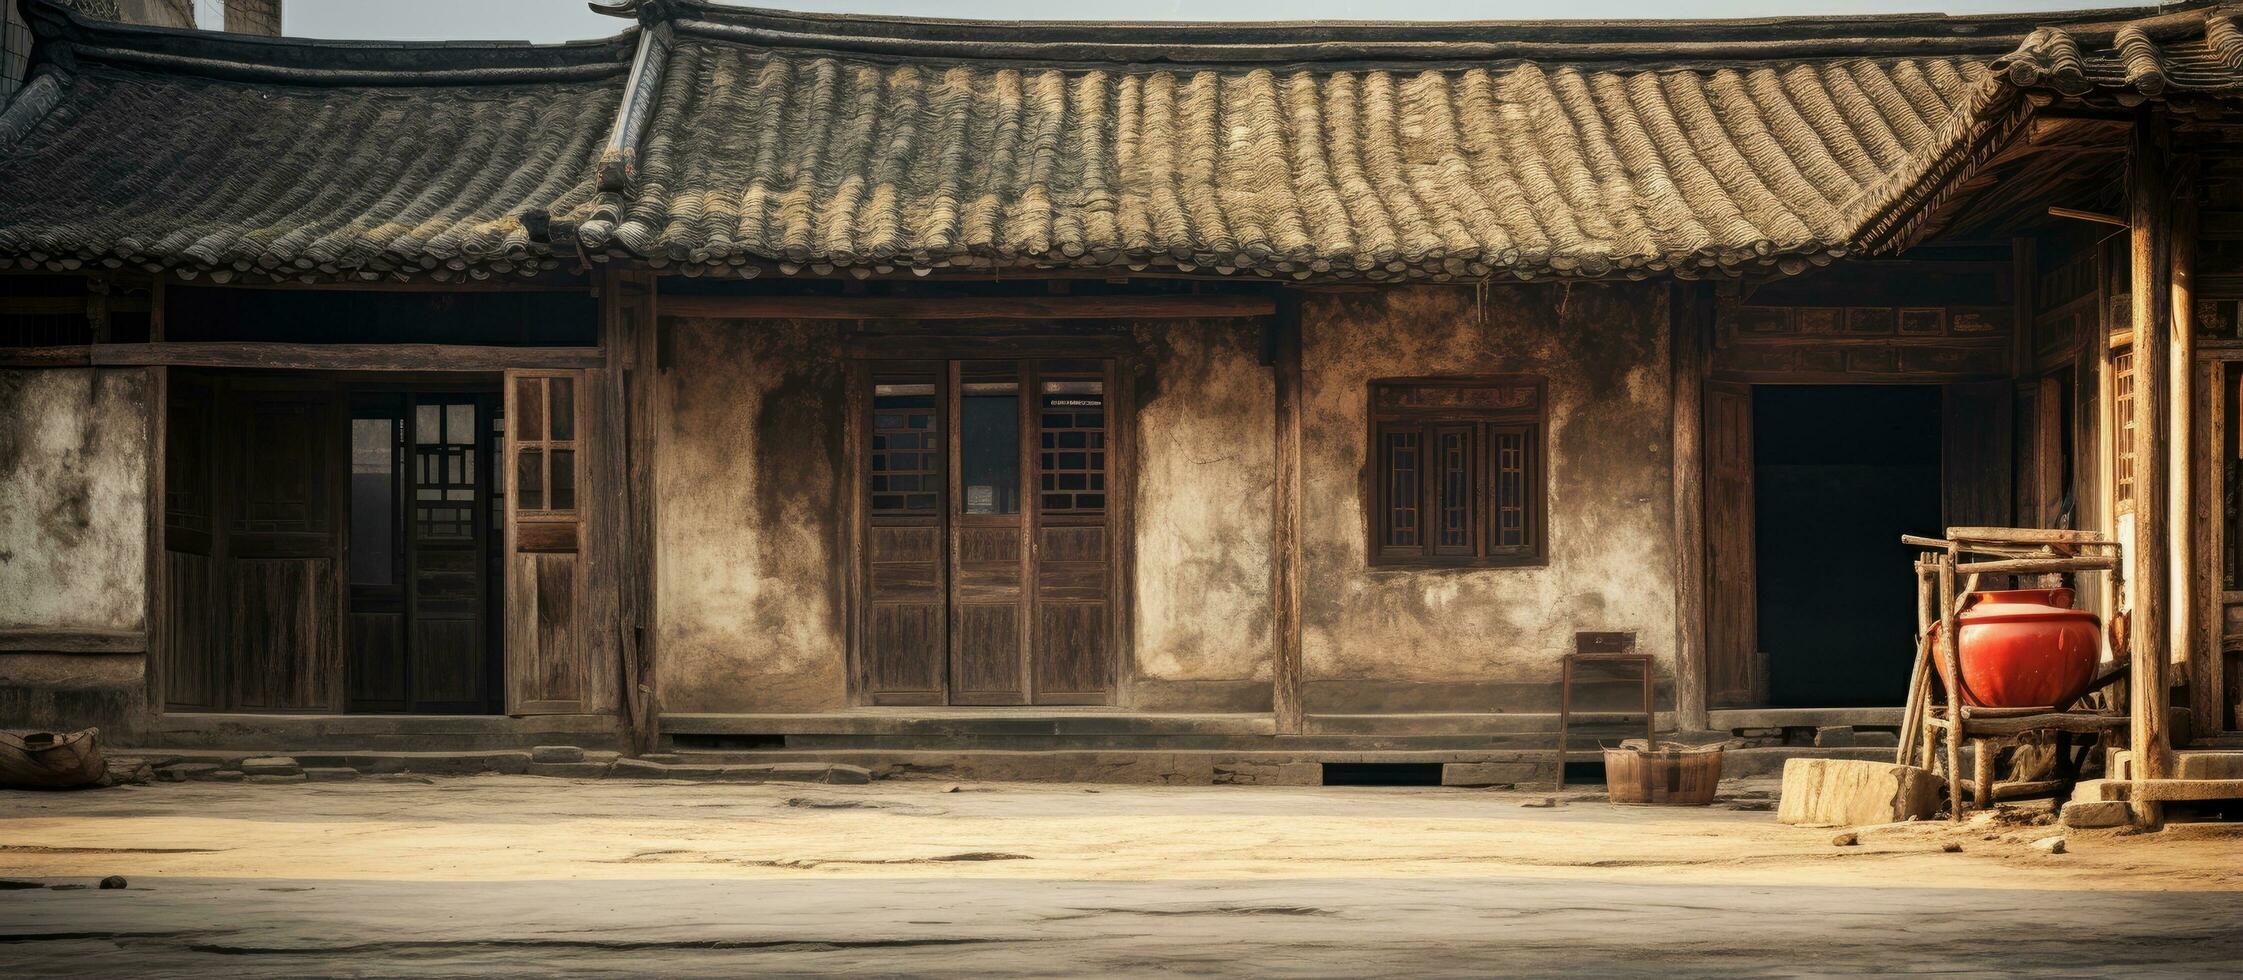 Ancient Chinese dwelling photo